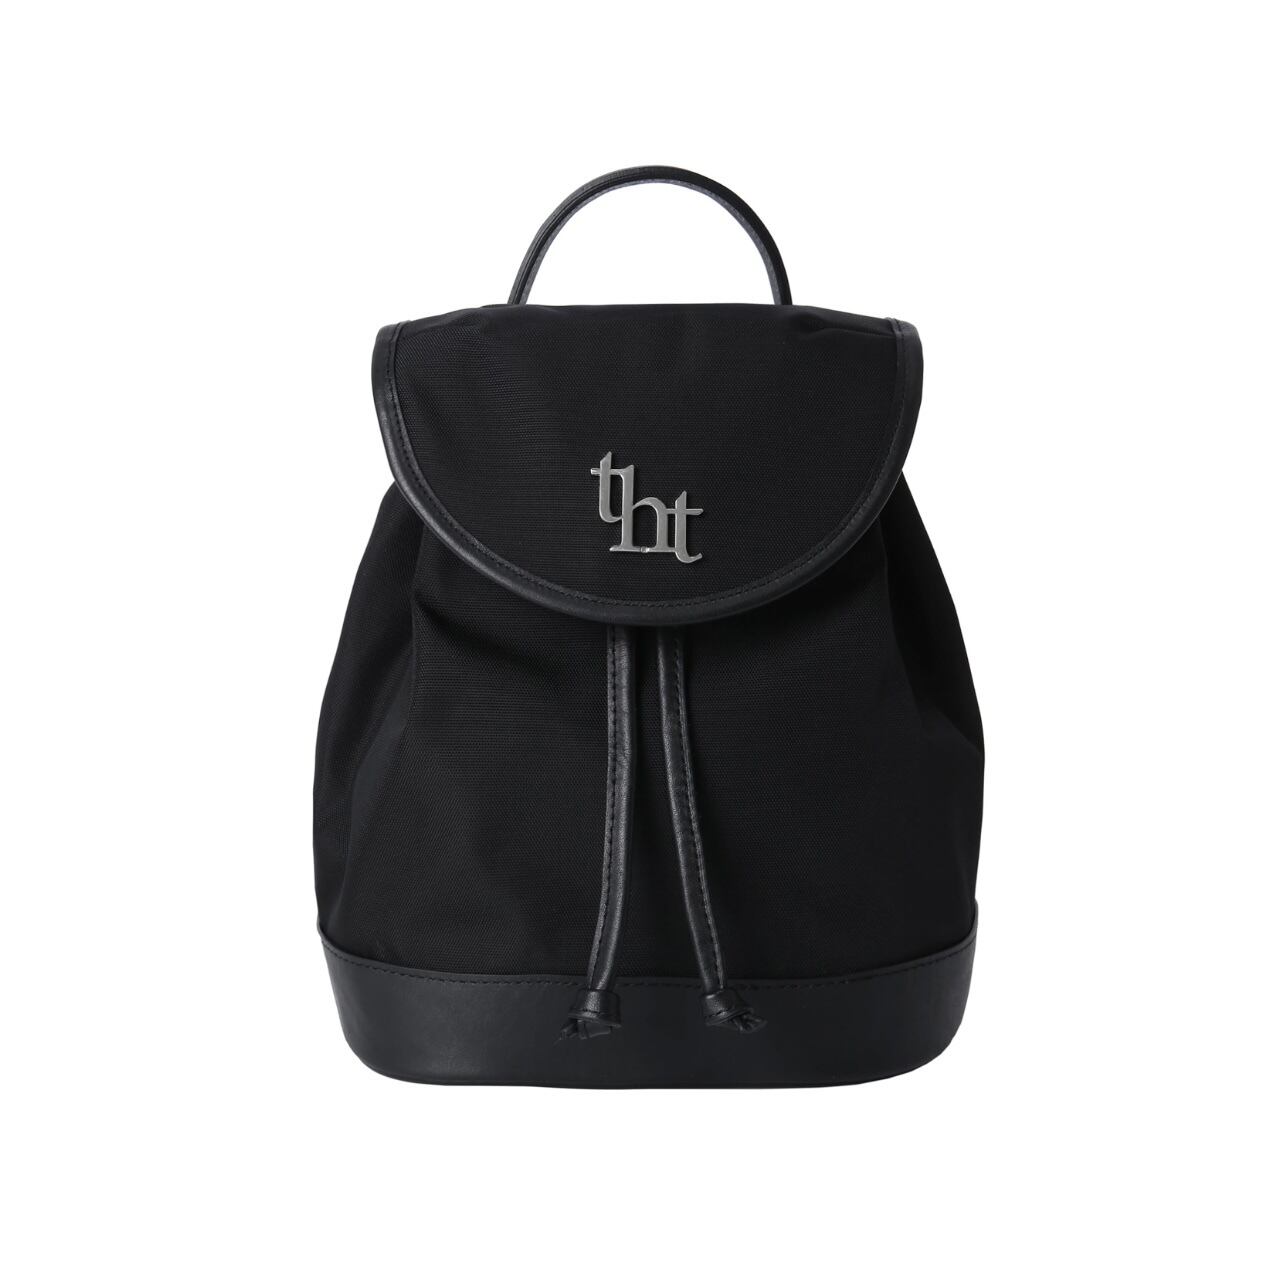 [threetimes] Acorn backpack 正規品 韓国ブランド 韓国通販 韓国代行 韓国ファッション バッグ | BONZ  (韓国ブランド 代行) powered by BASE